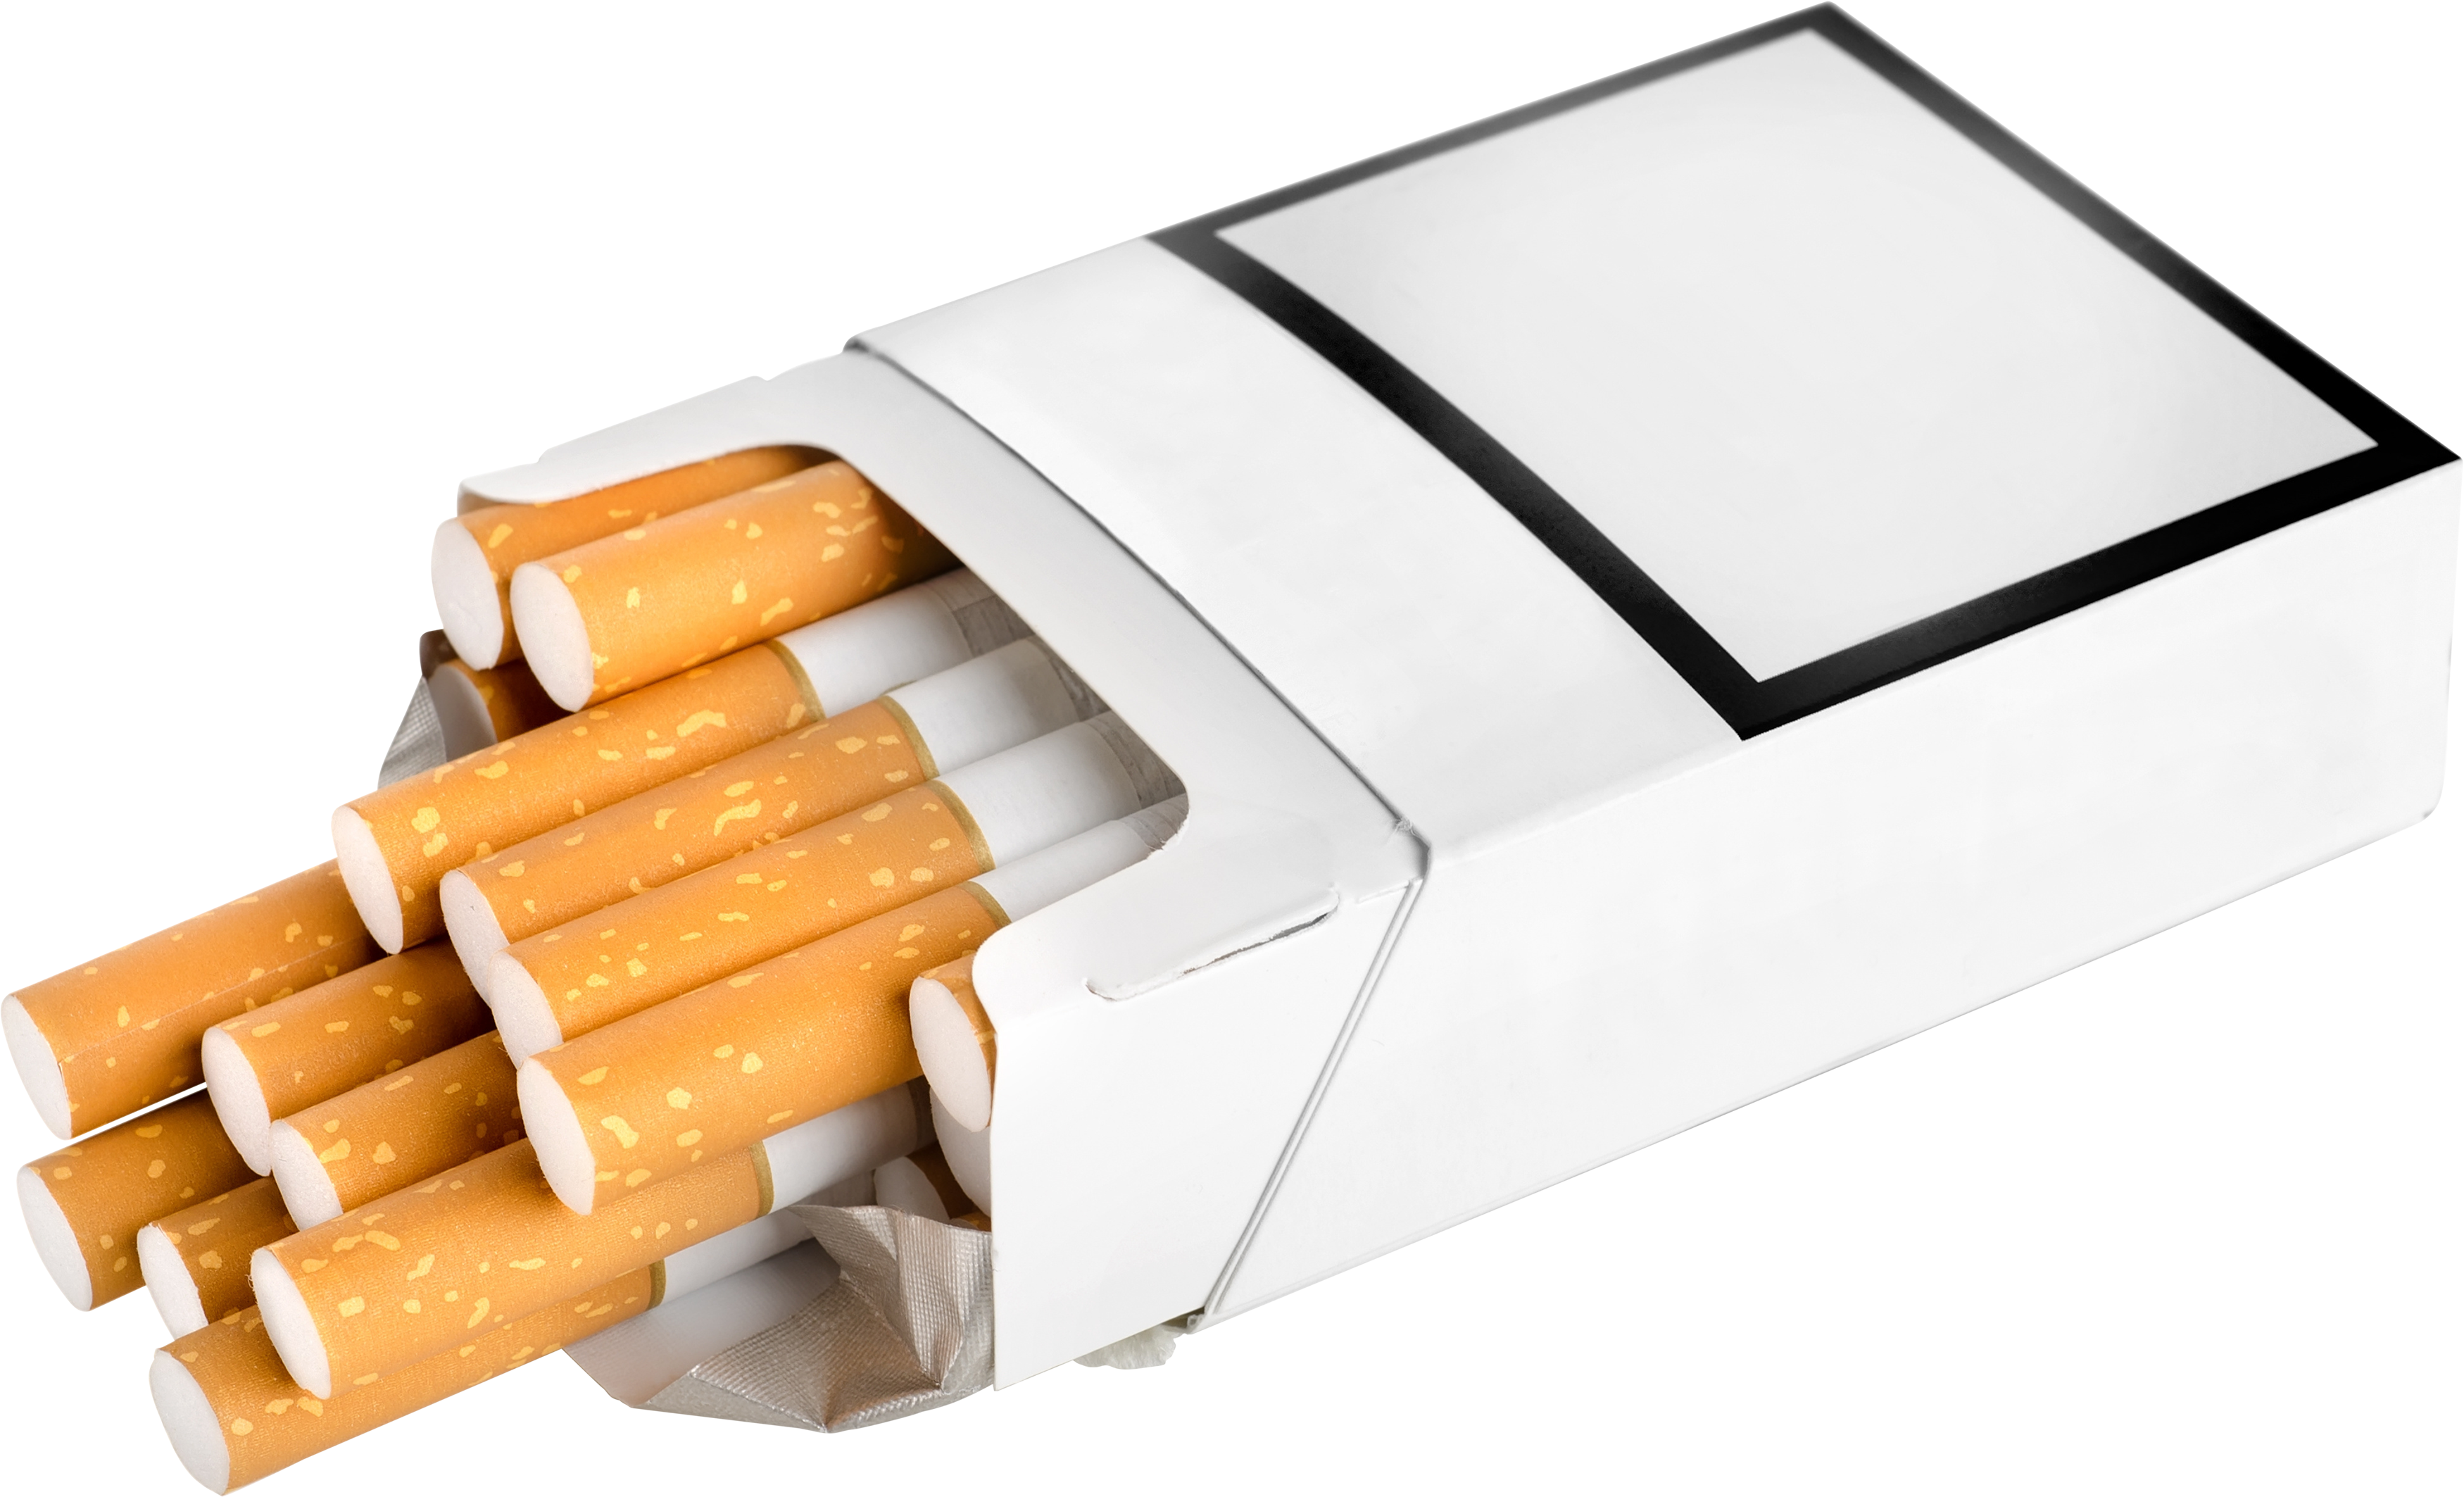 Cigarette Pack PNG Image.